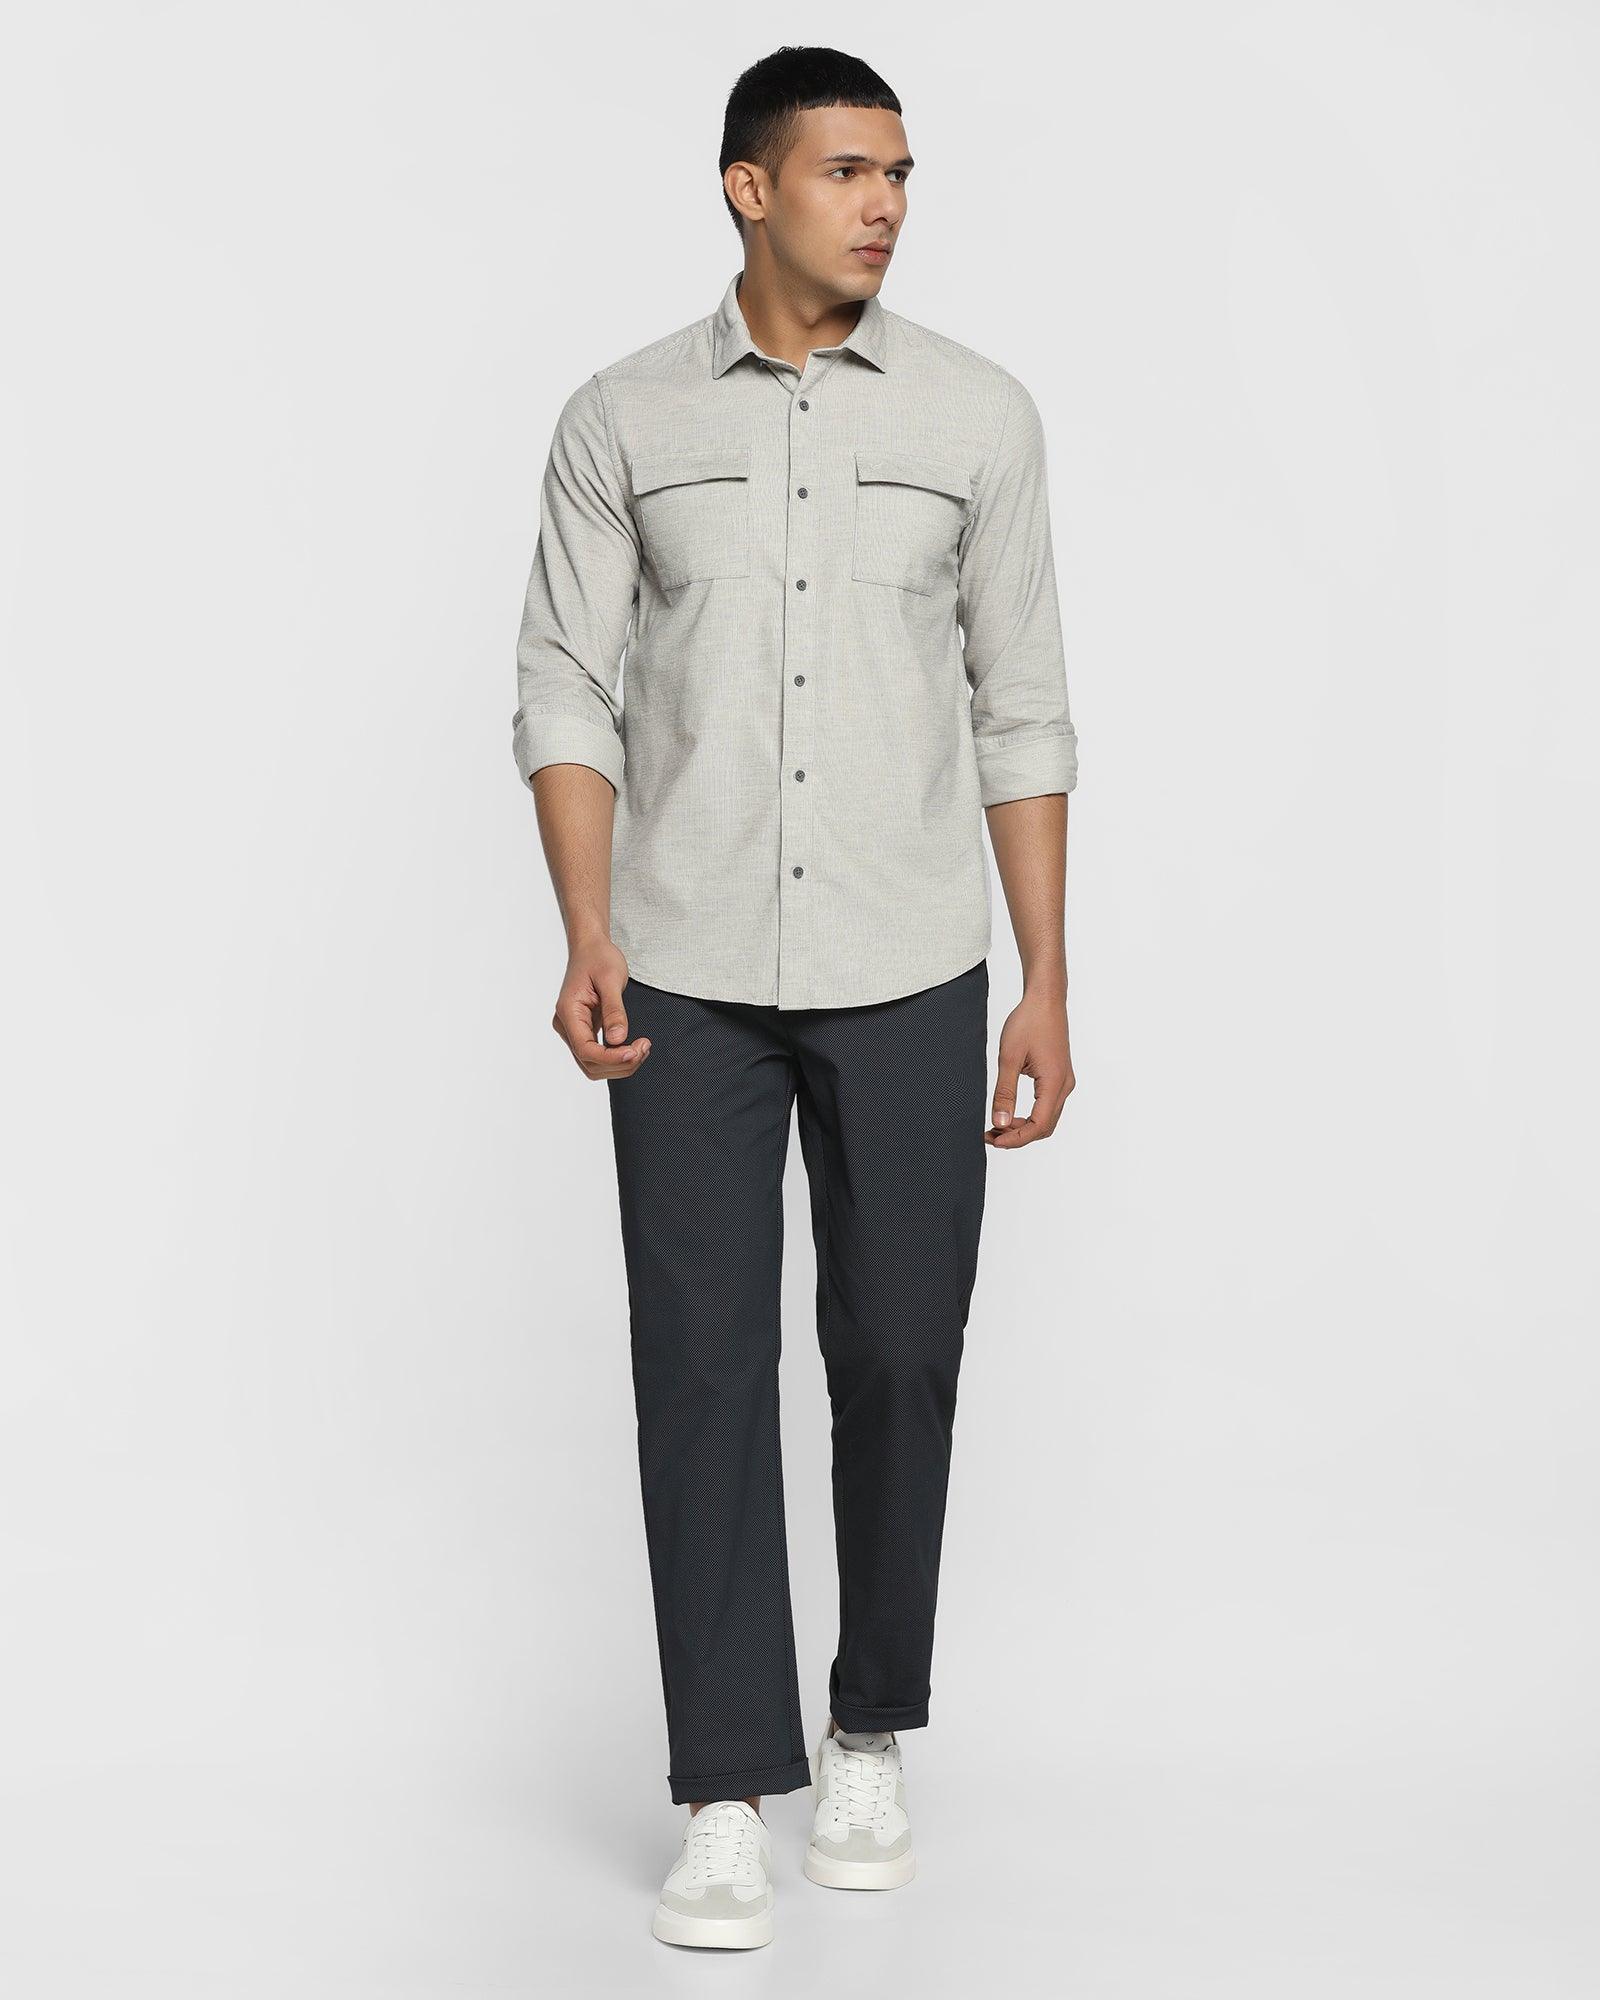 Casual Grey Solid Shirt - Ohio